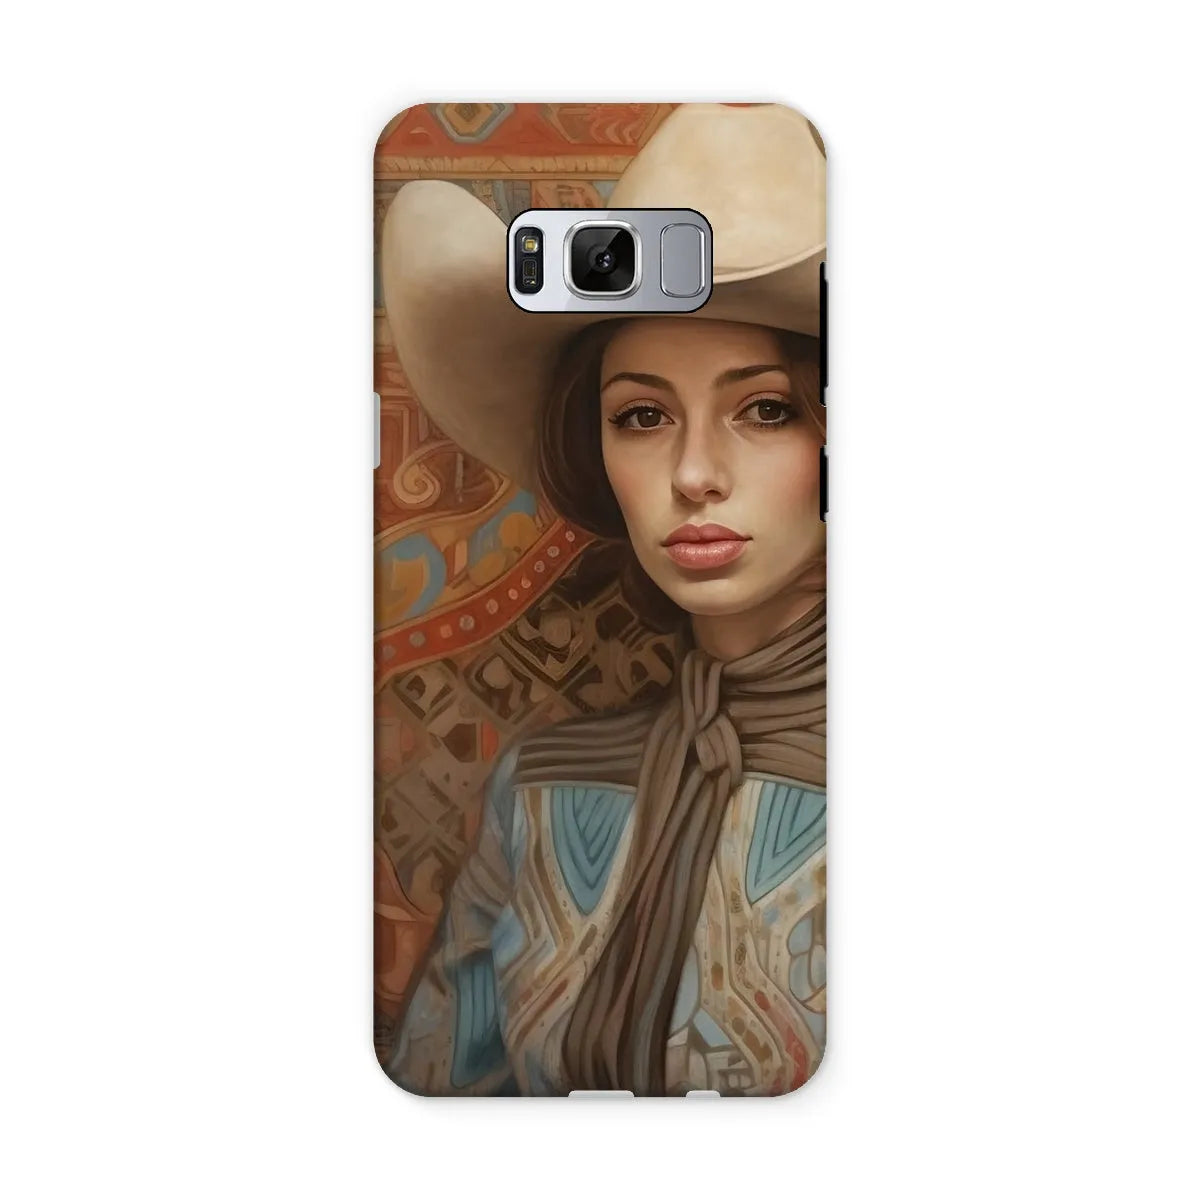 Anahita The Lesbian Cowgirl - Sapphic Art Phone Case - Samsung Galaxy S8 / Matte - Mobile Phone Cases - Aesthetic Art